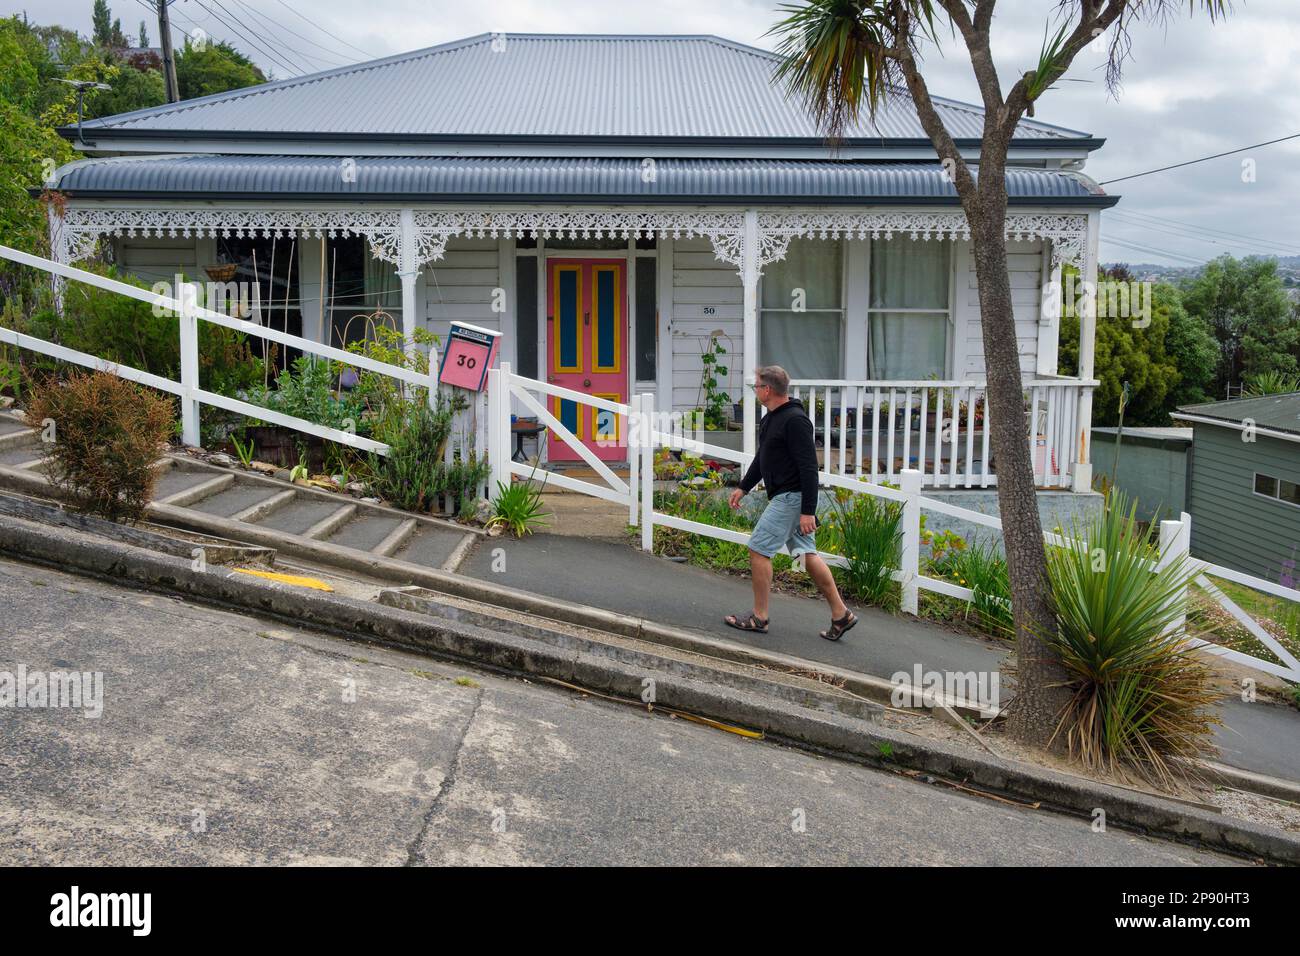 A house on the steepest street in the world - Baldwin Street, Dunedin, South Island, New Zealand Stock Photo